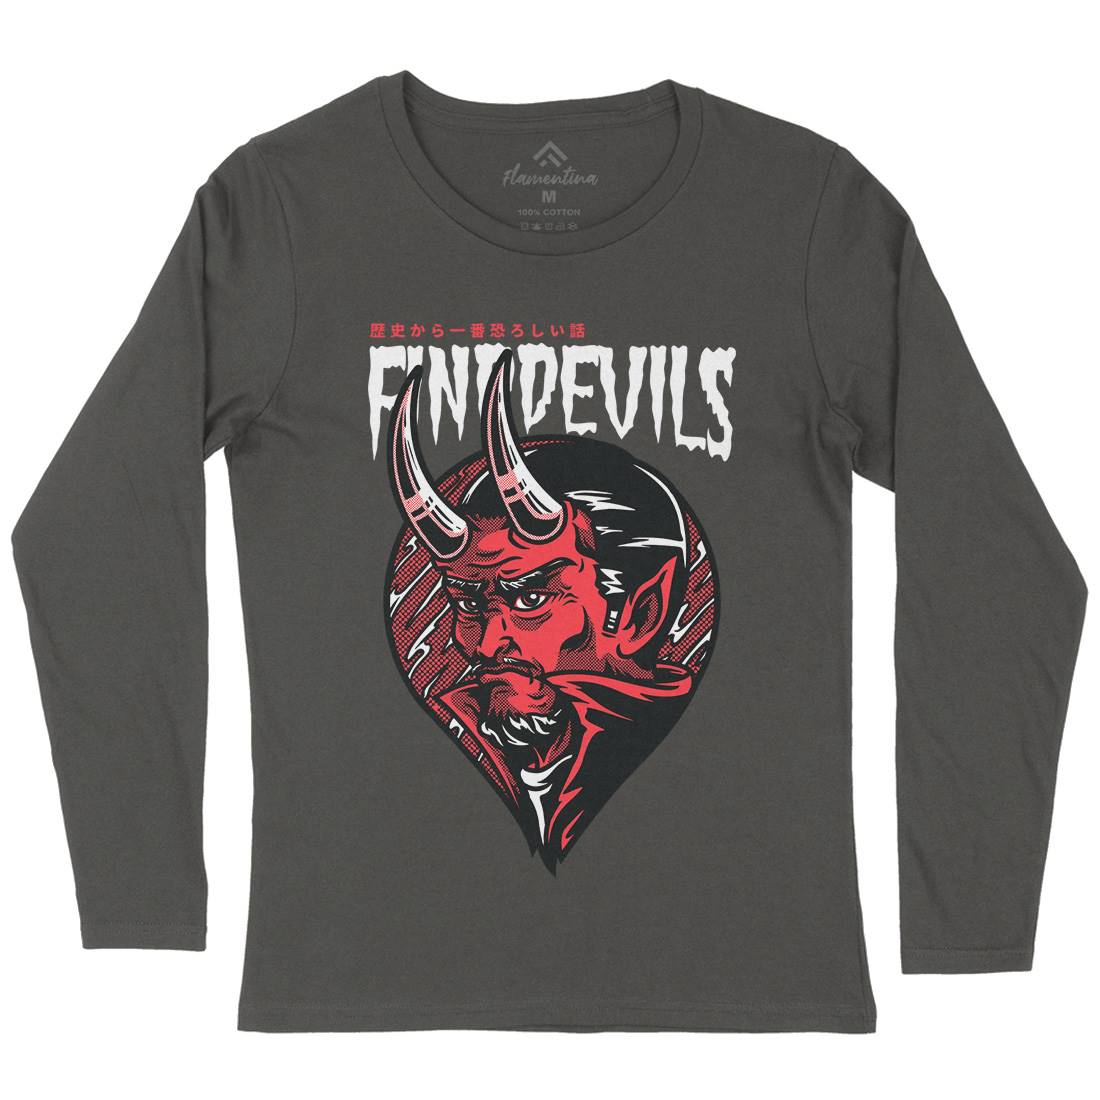 Find Devils Womens Long Sleeve T-Shirt Horror D775